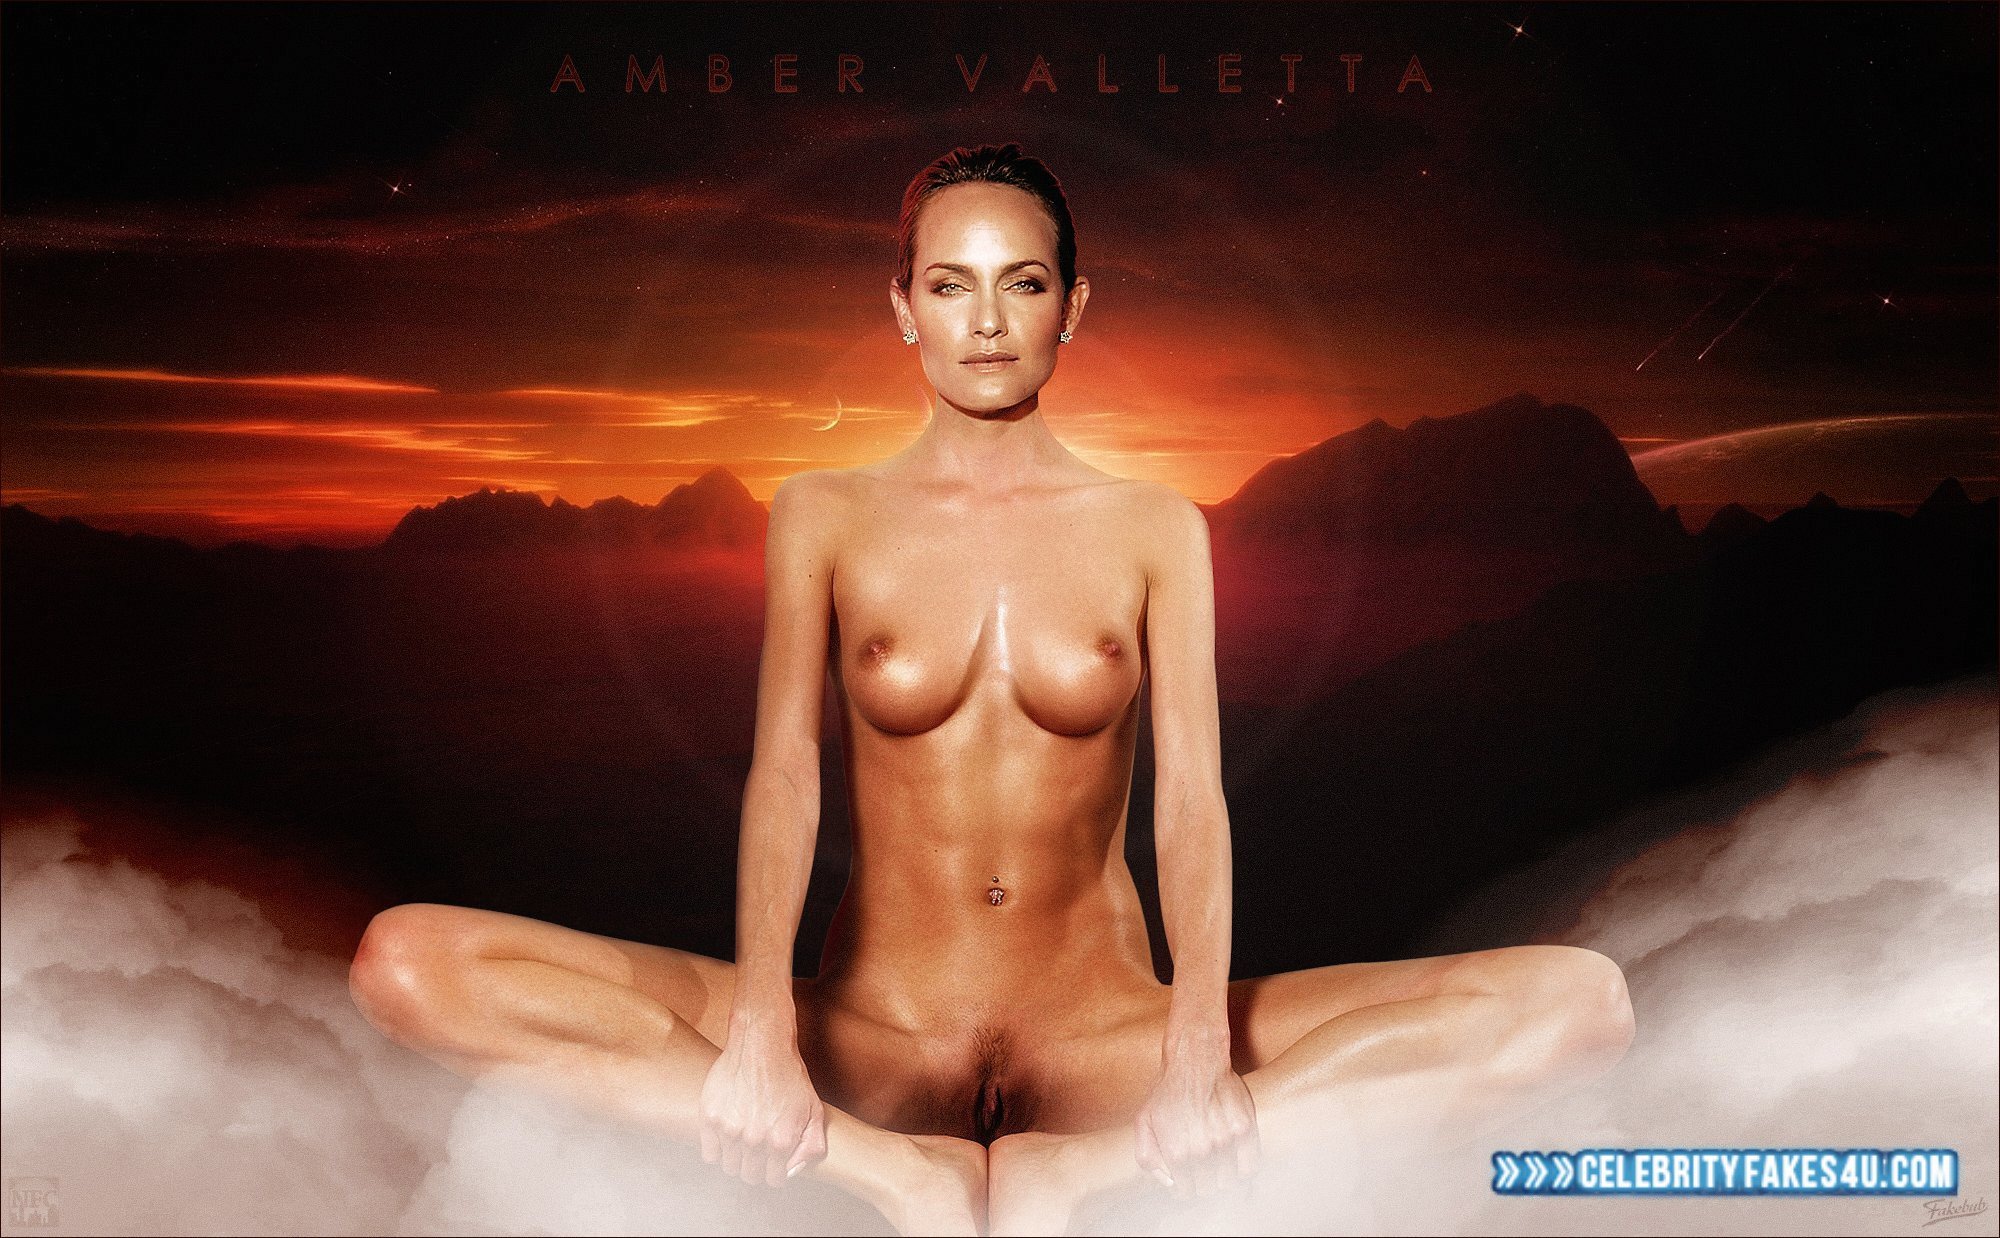 Amber valletta nude pics